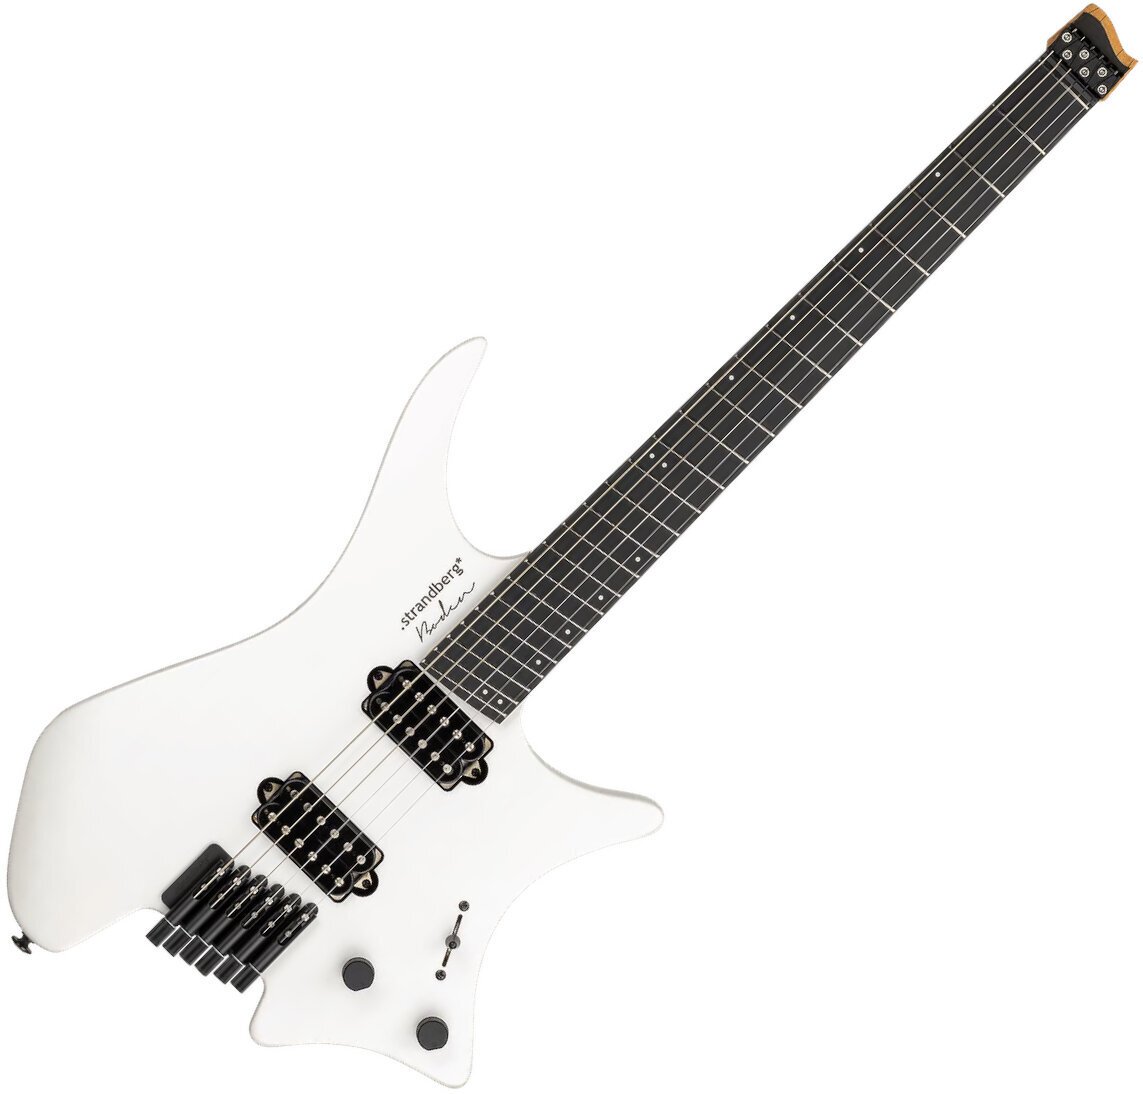 Guitarra sem cabeçalho Strandberg Boden Metal NX 6 White Granite